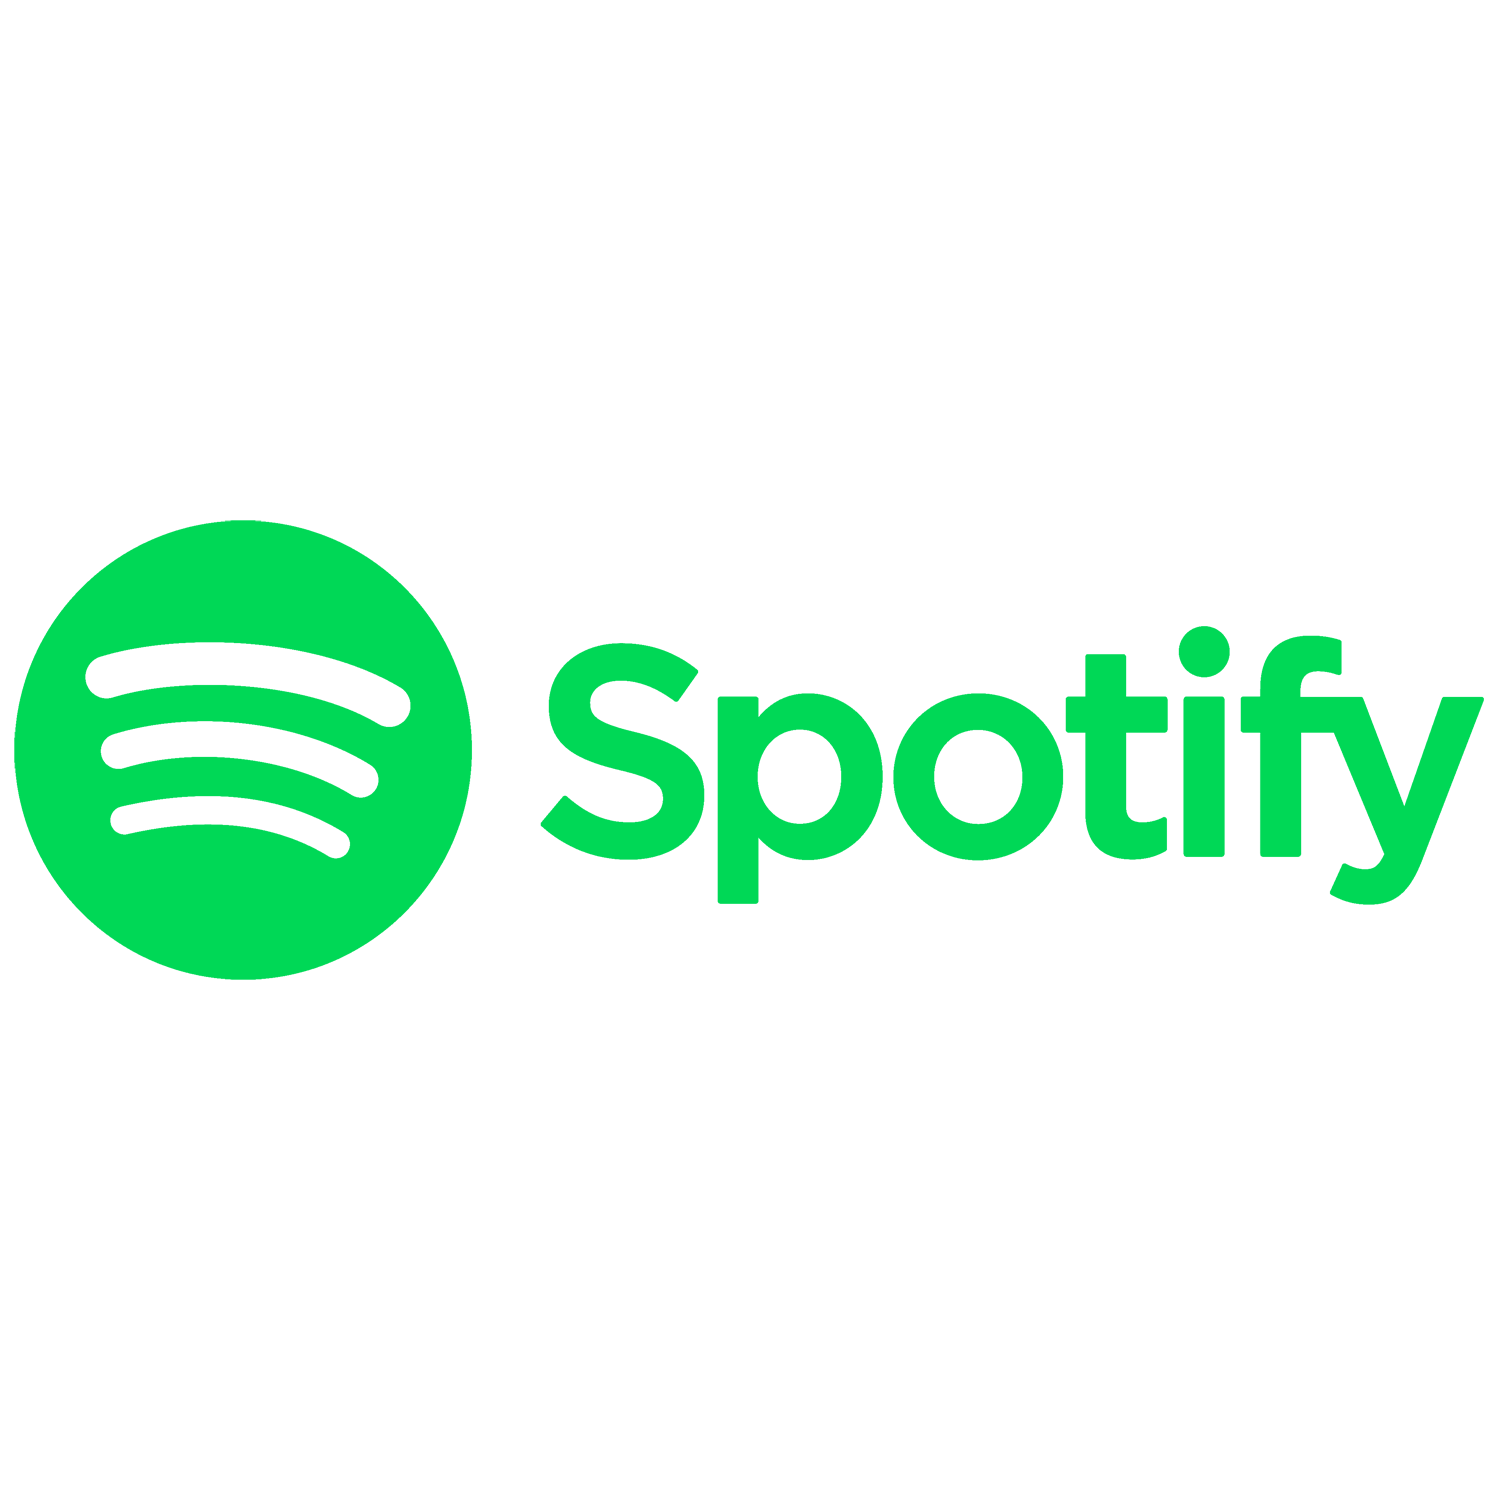 Spotify Logo transparent PNG